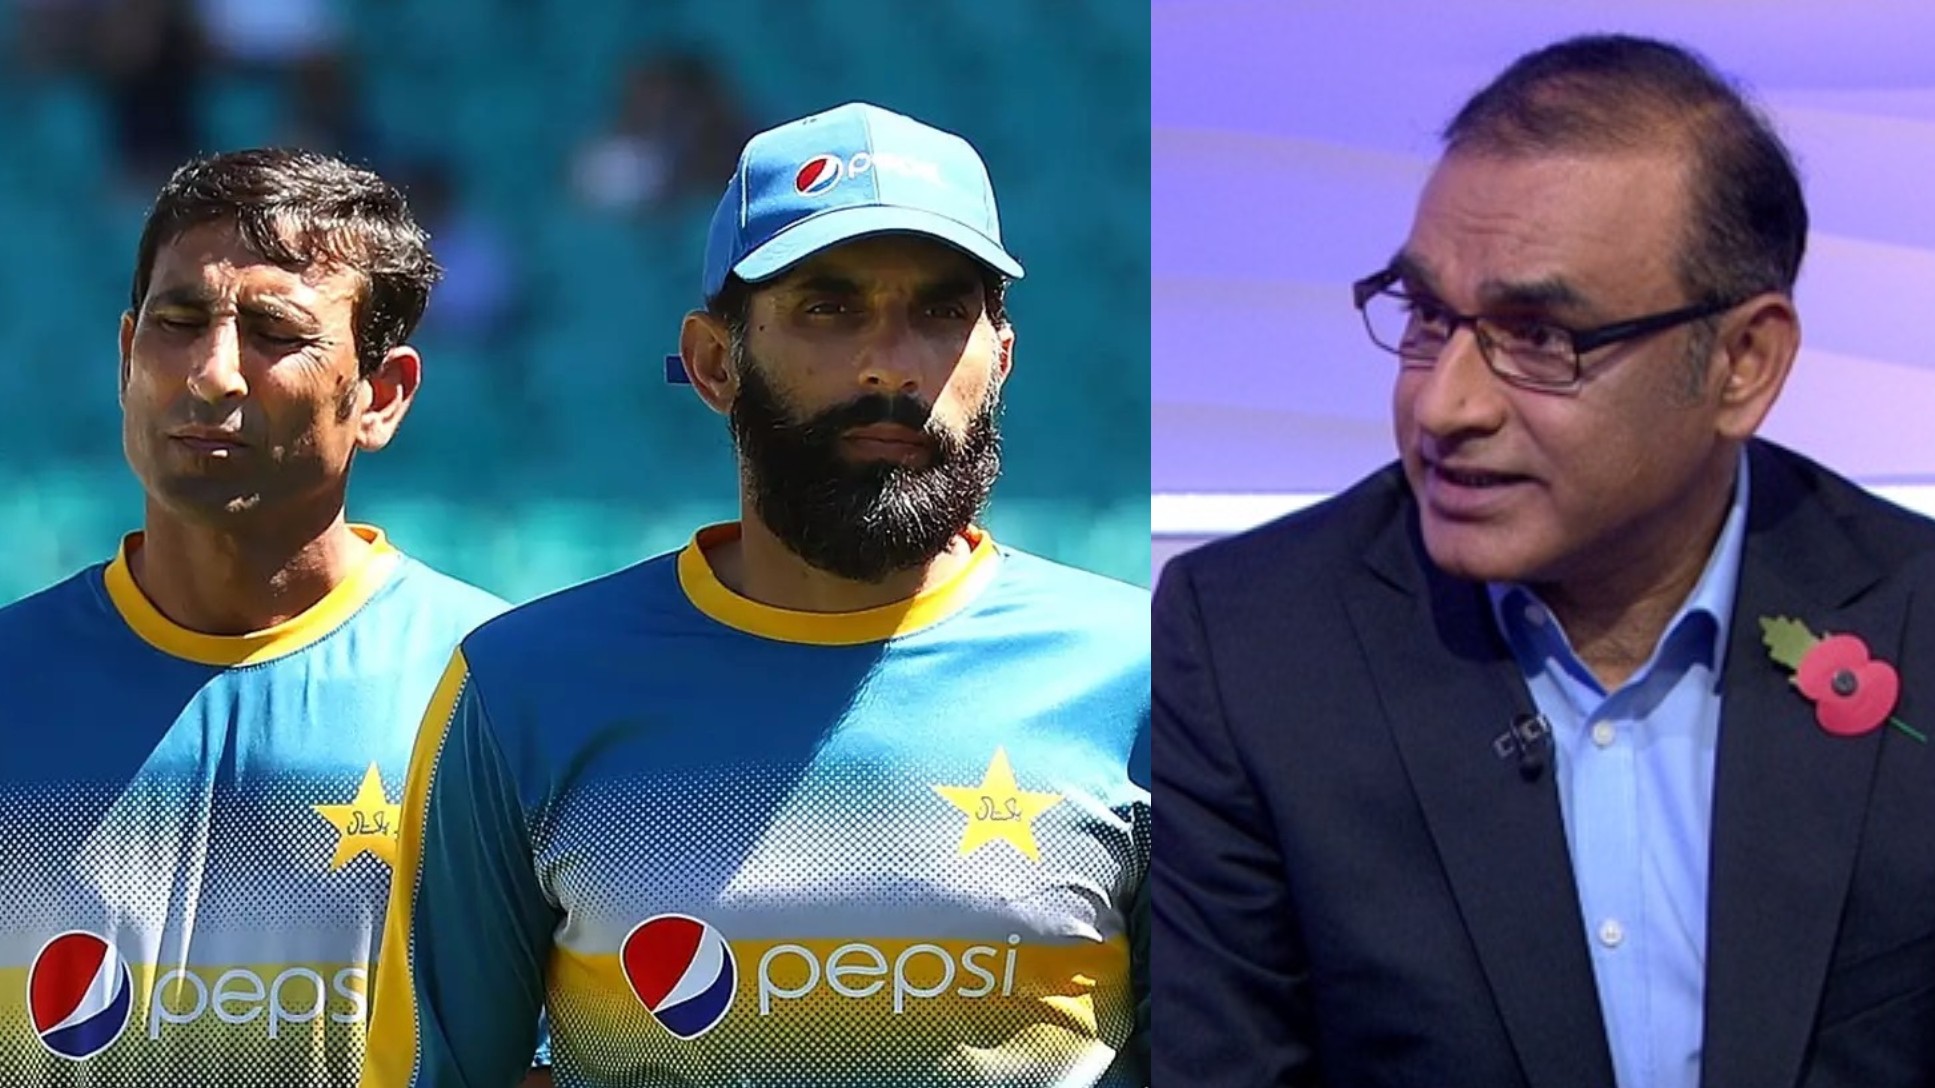 Younis Khan becoming batting coach highlights Misbah’s failure as coach, says Aamir Sohail